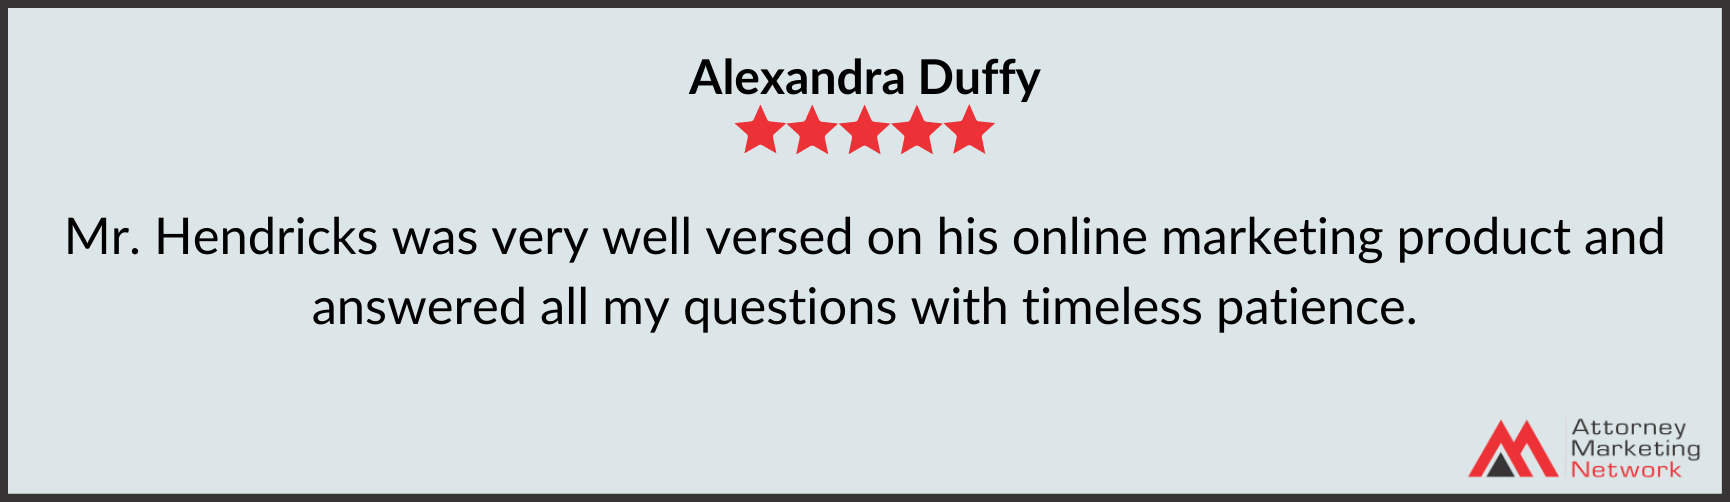 alexandra duffy-testimonial